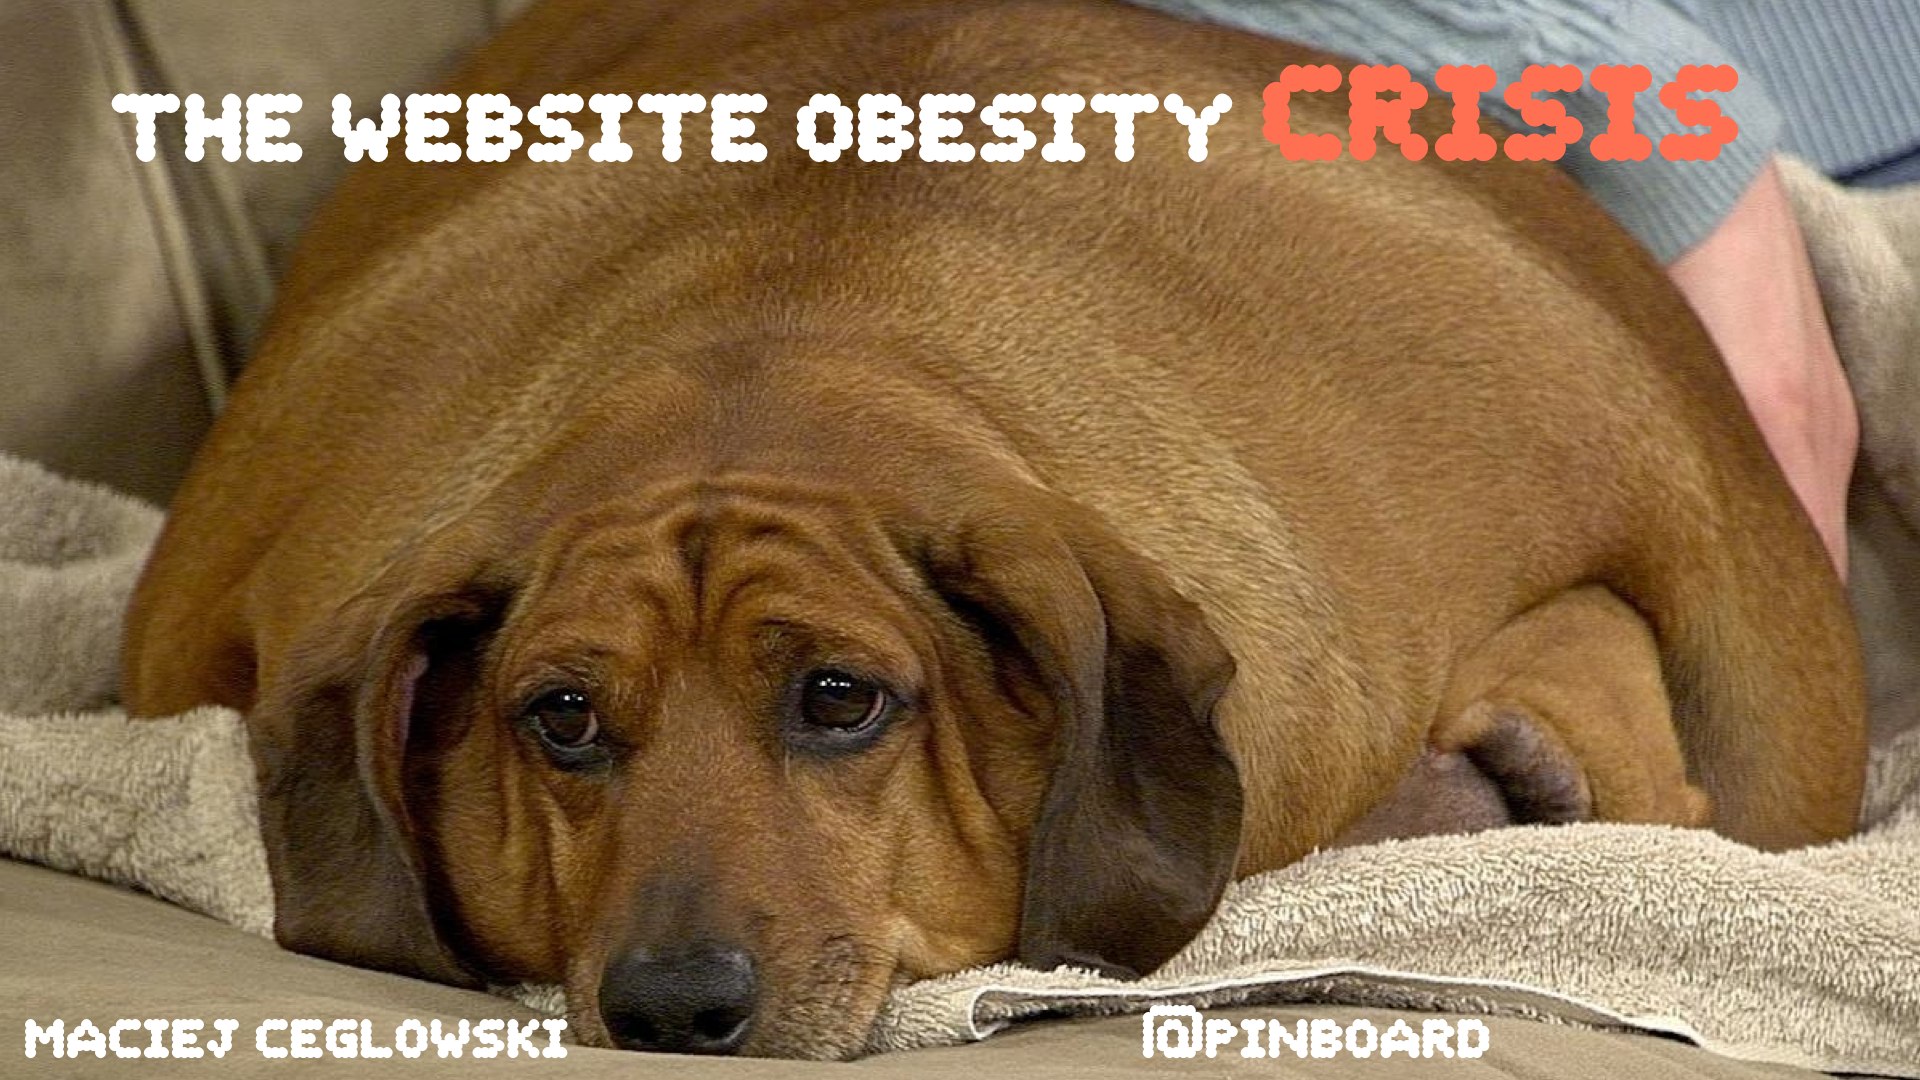 The website obesity crisis